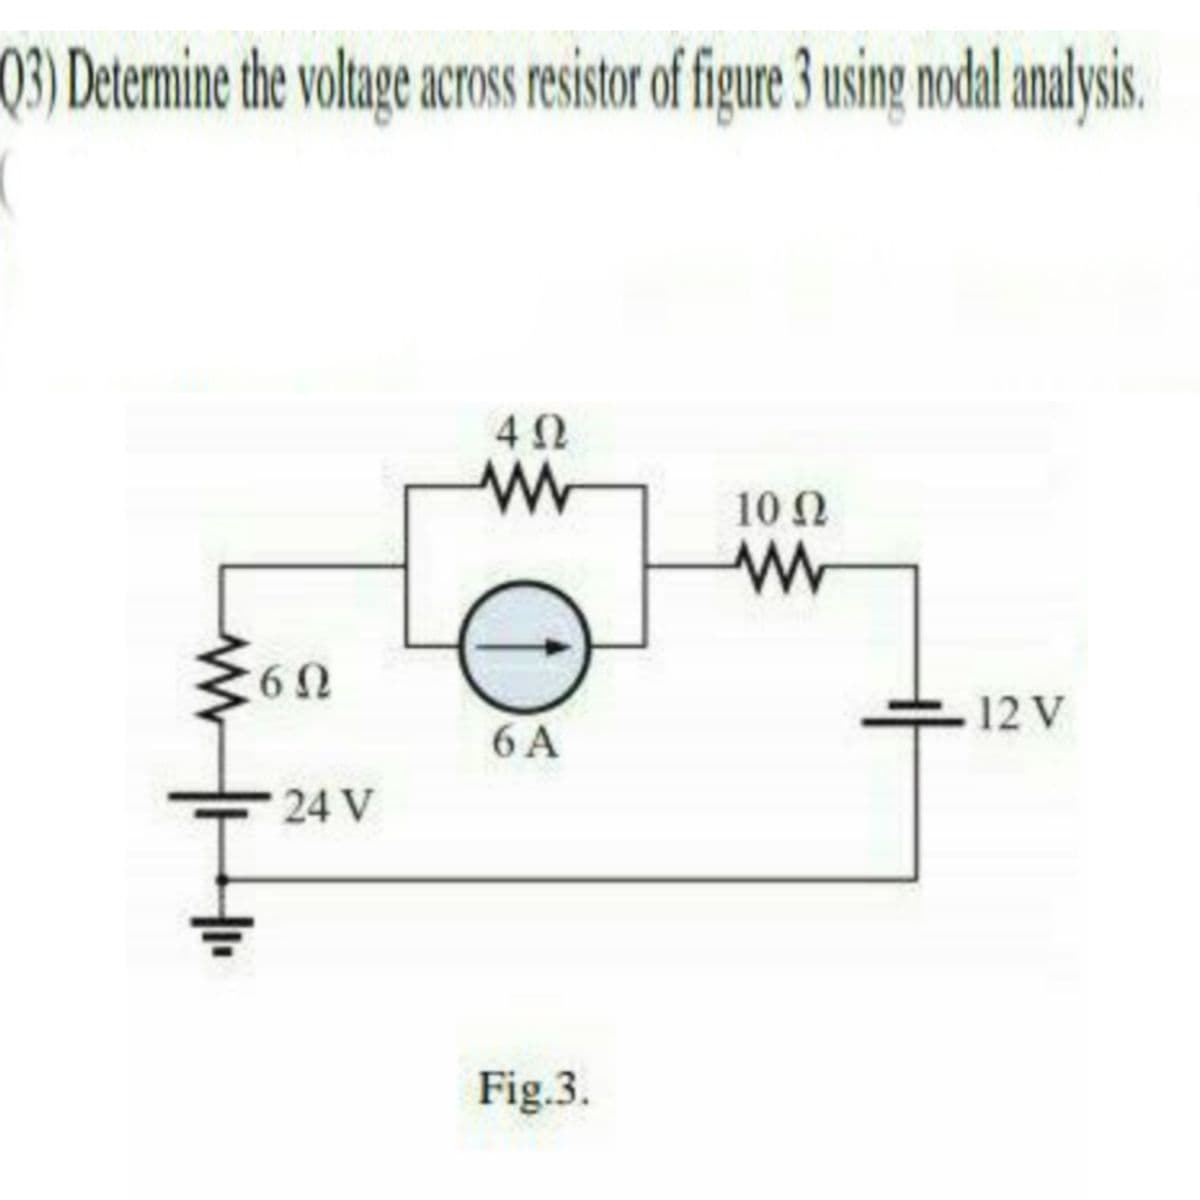 03) Detemine the voltage across resistor of figure 3 using nodal analysis.
10 N
60
12 V
6 A
24 V
Fig.3.
